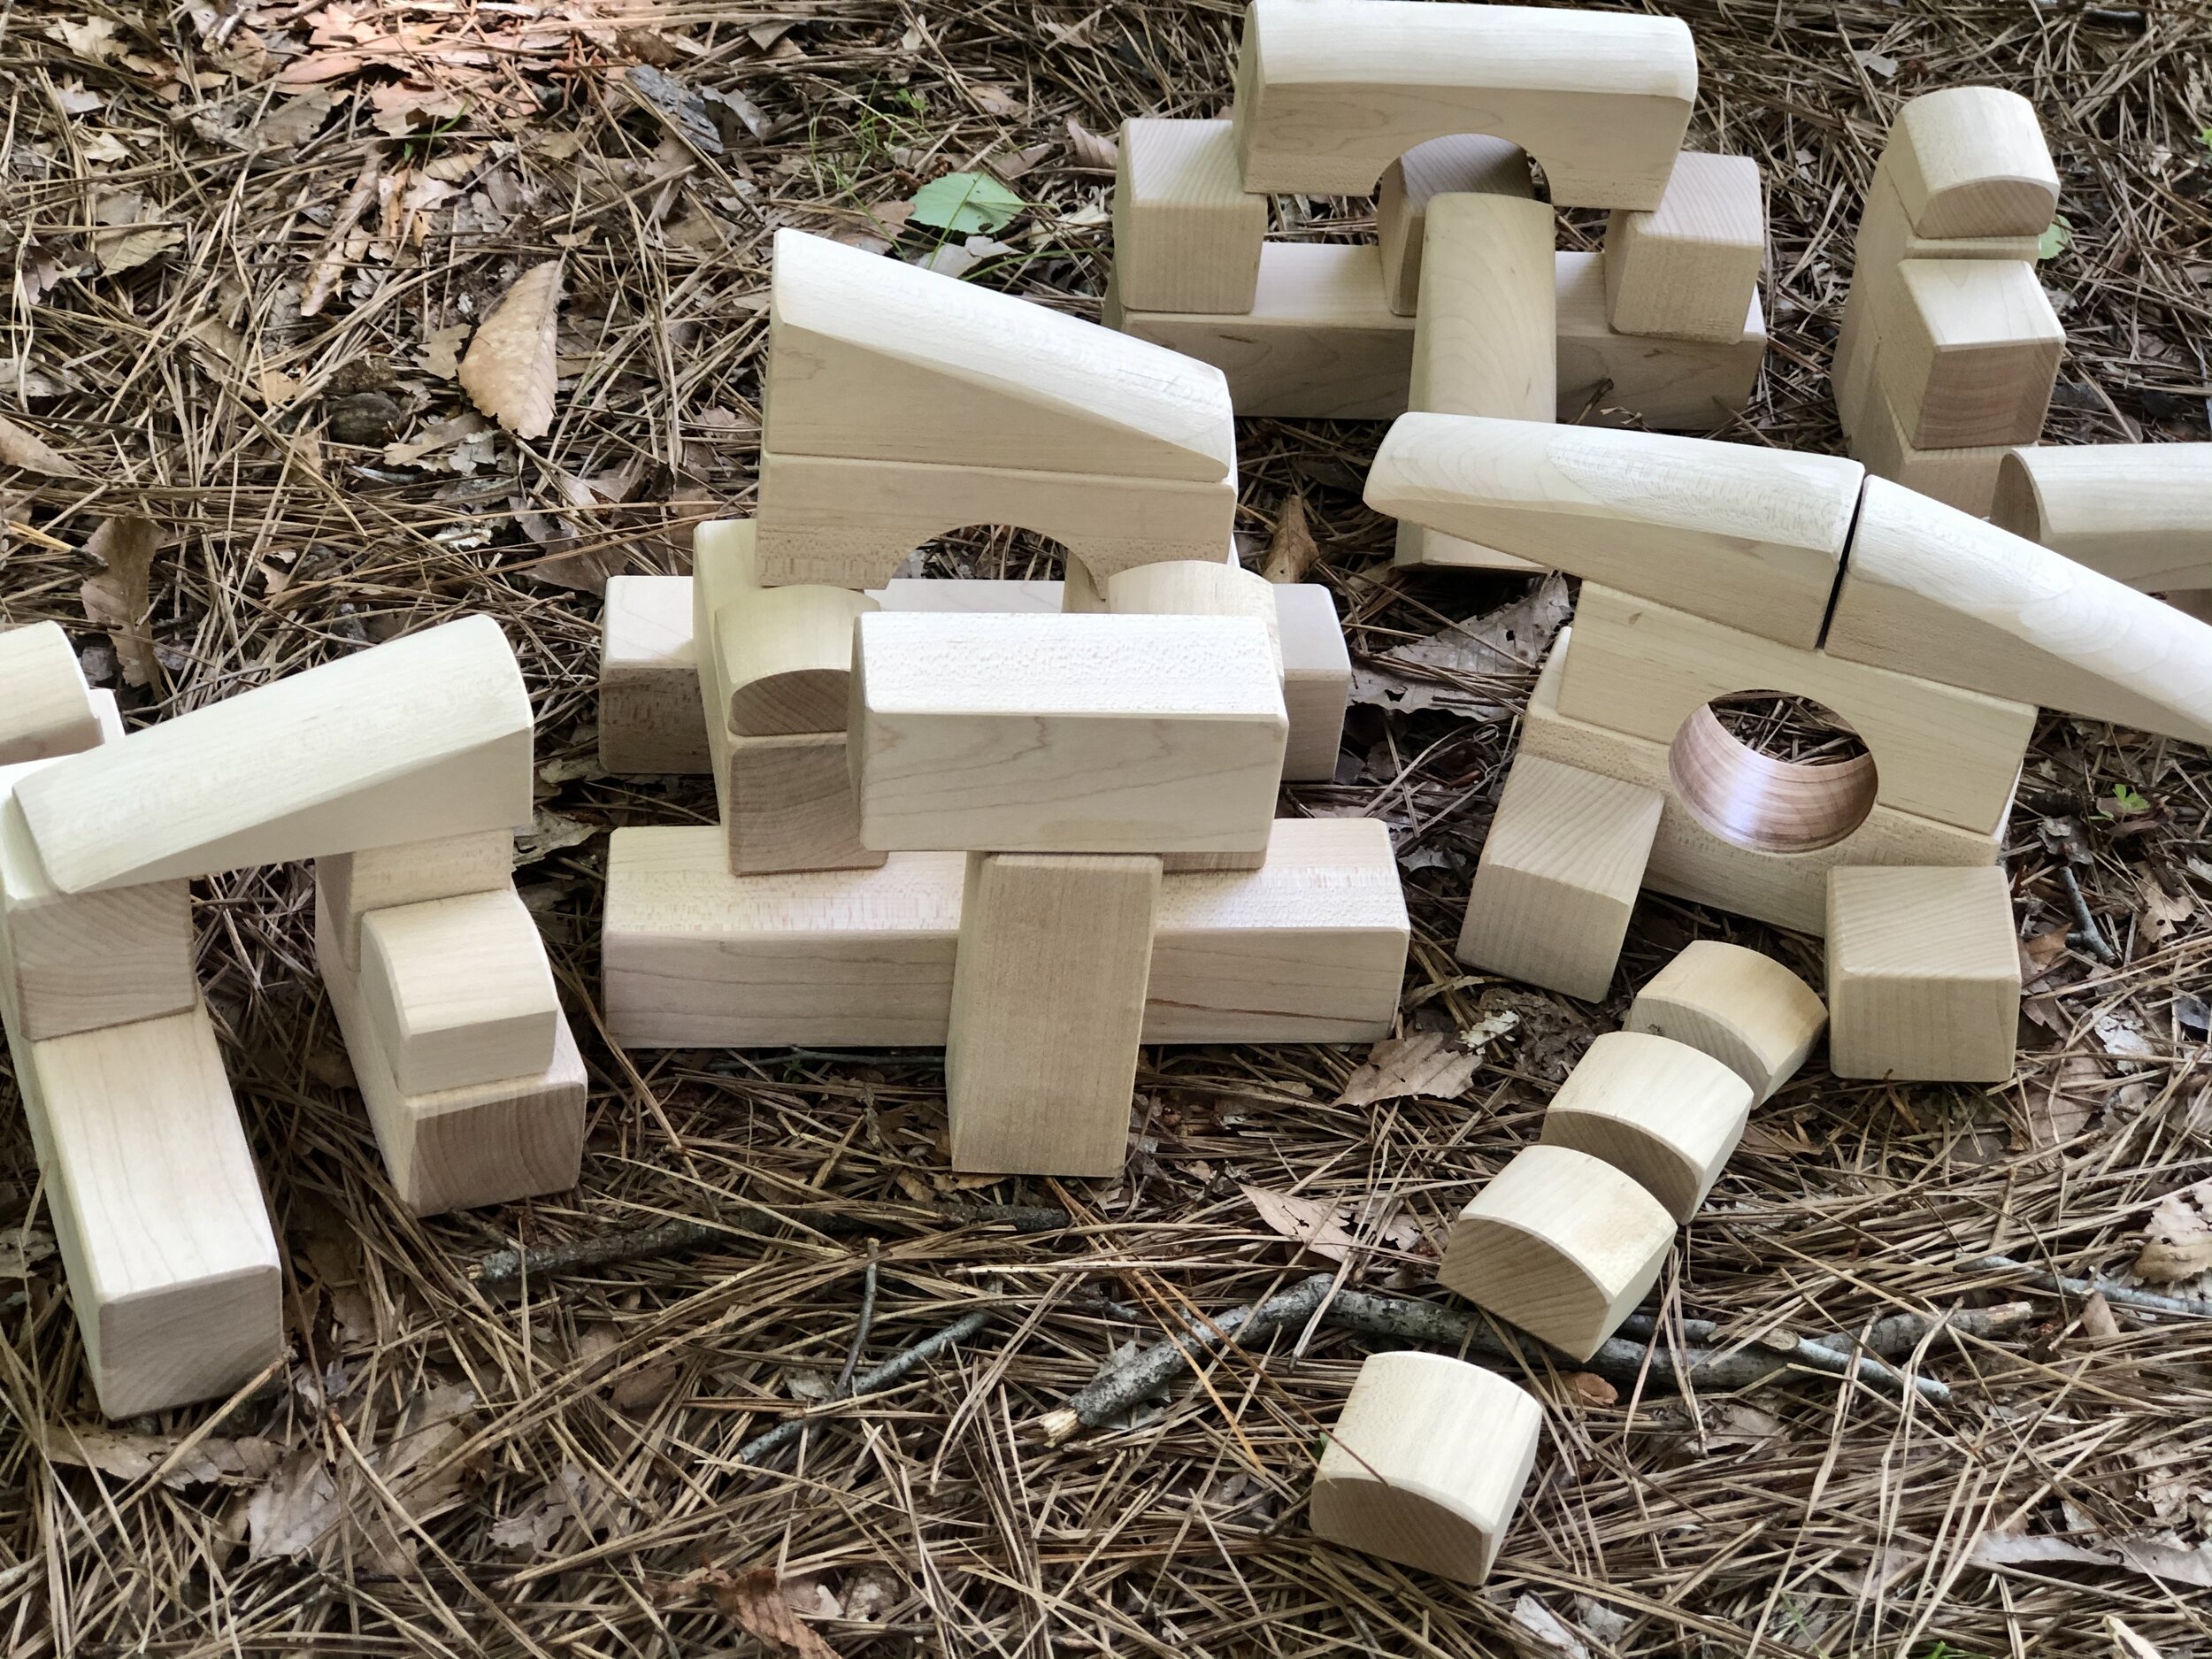 Solid Wooden Children's Blocks